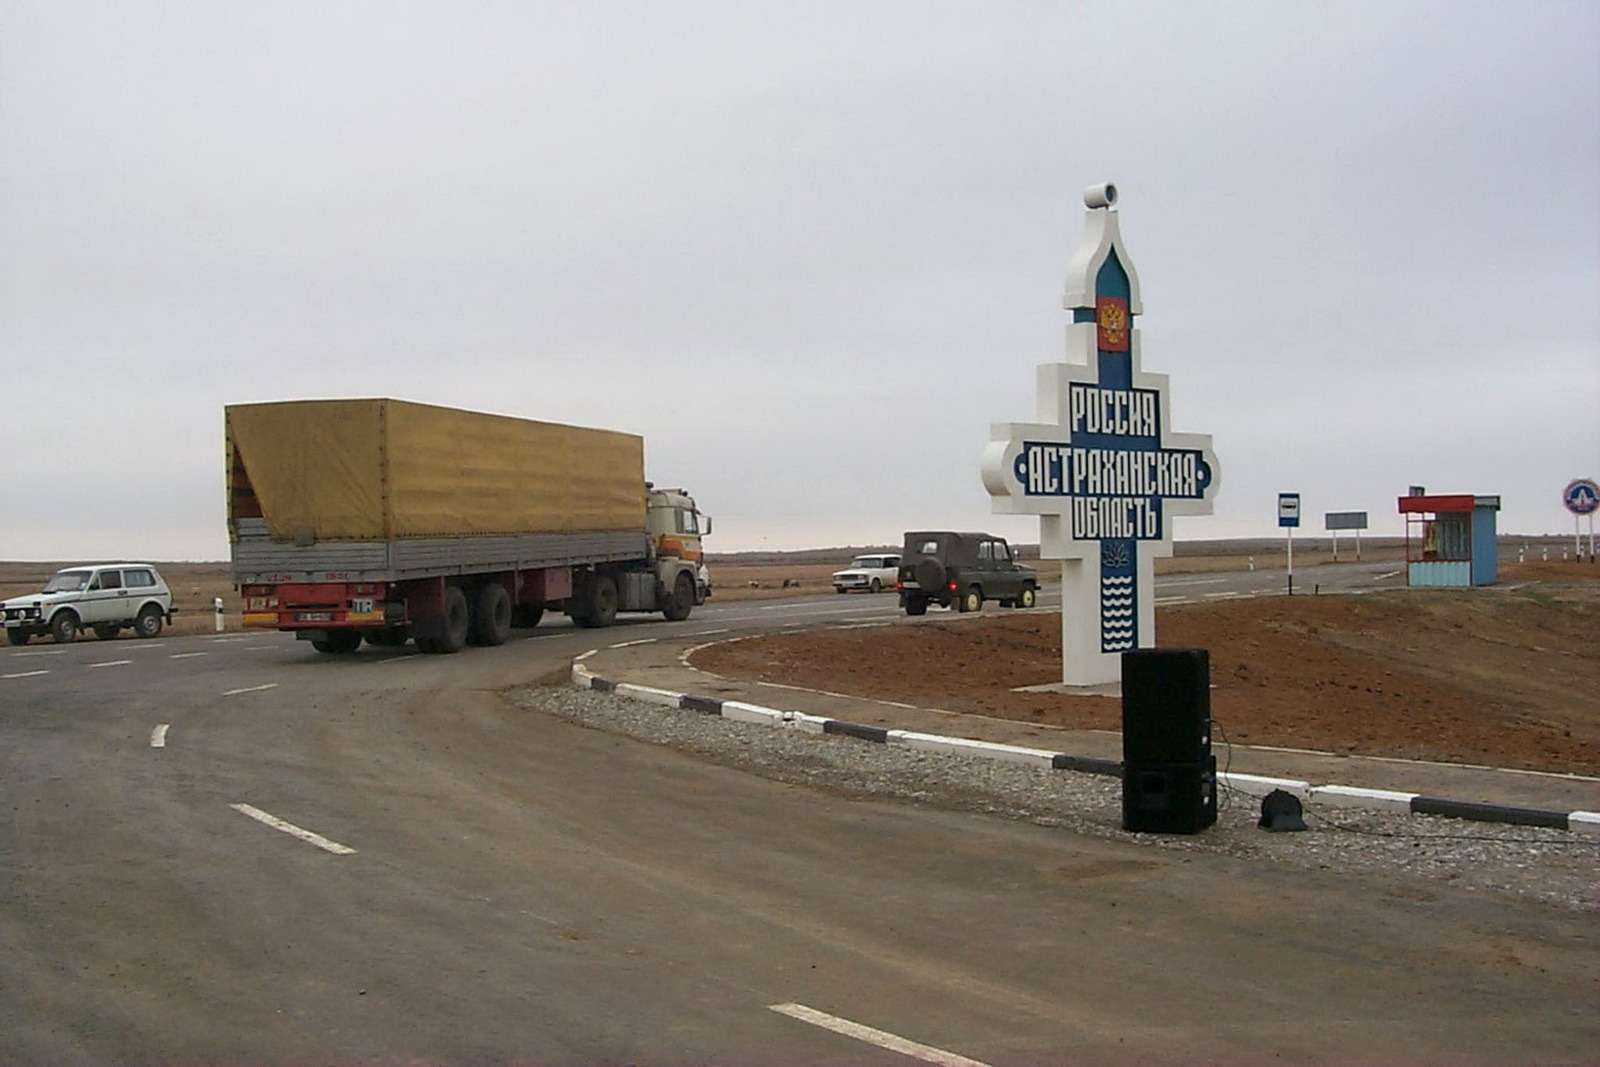 фотография границы казахстана